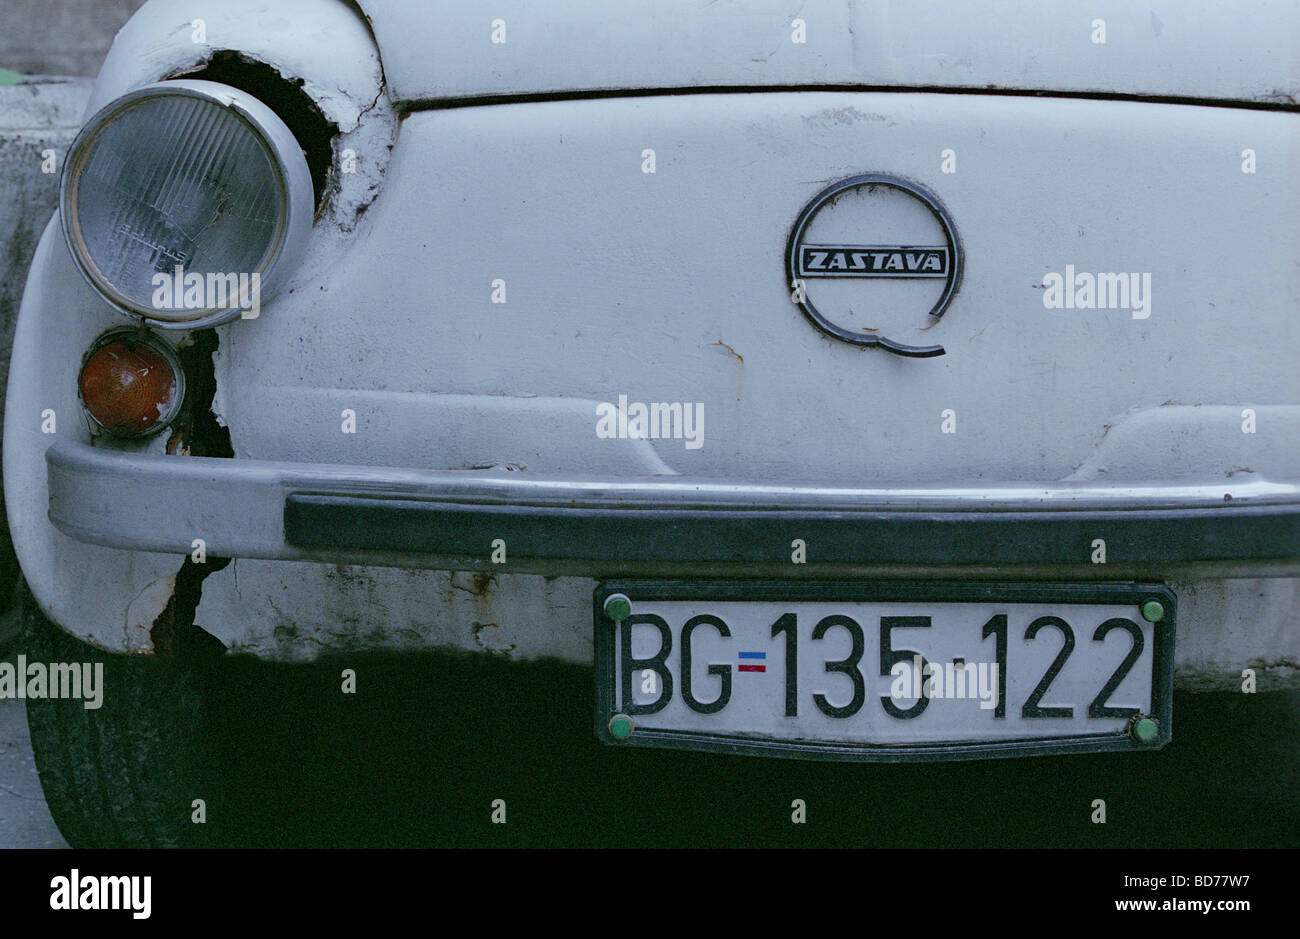 Parking white and rusty Zastava car with Belgrade license plate, Serbia, Balkans Stock Photo